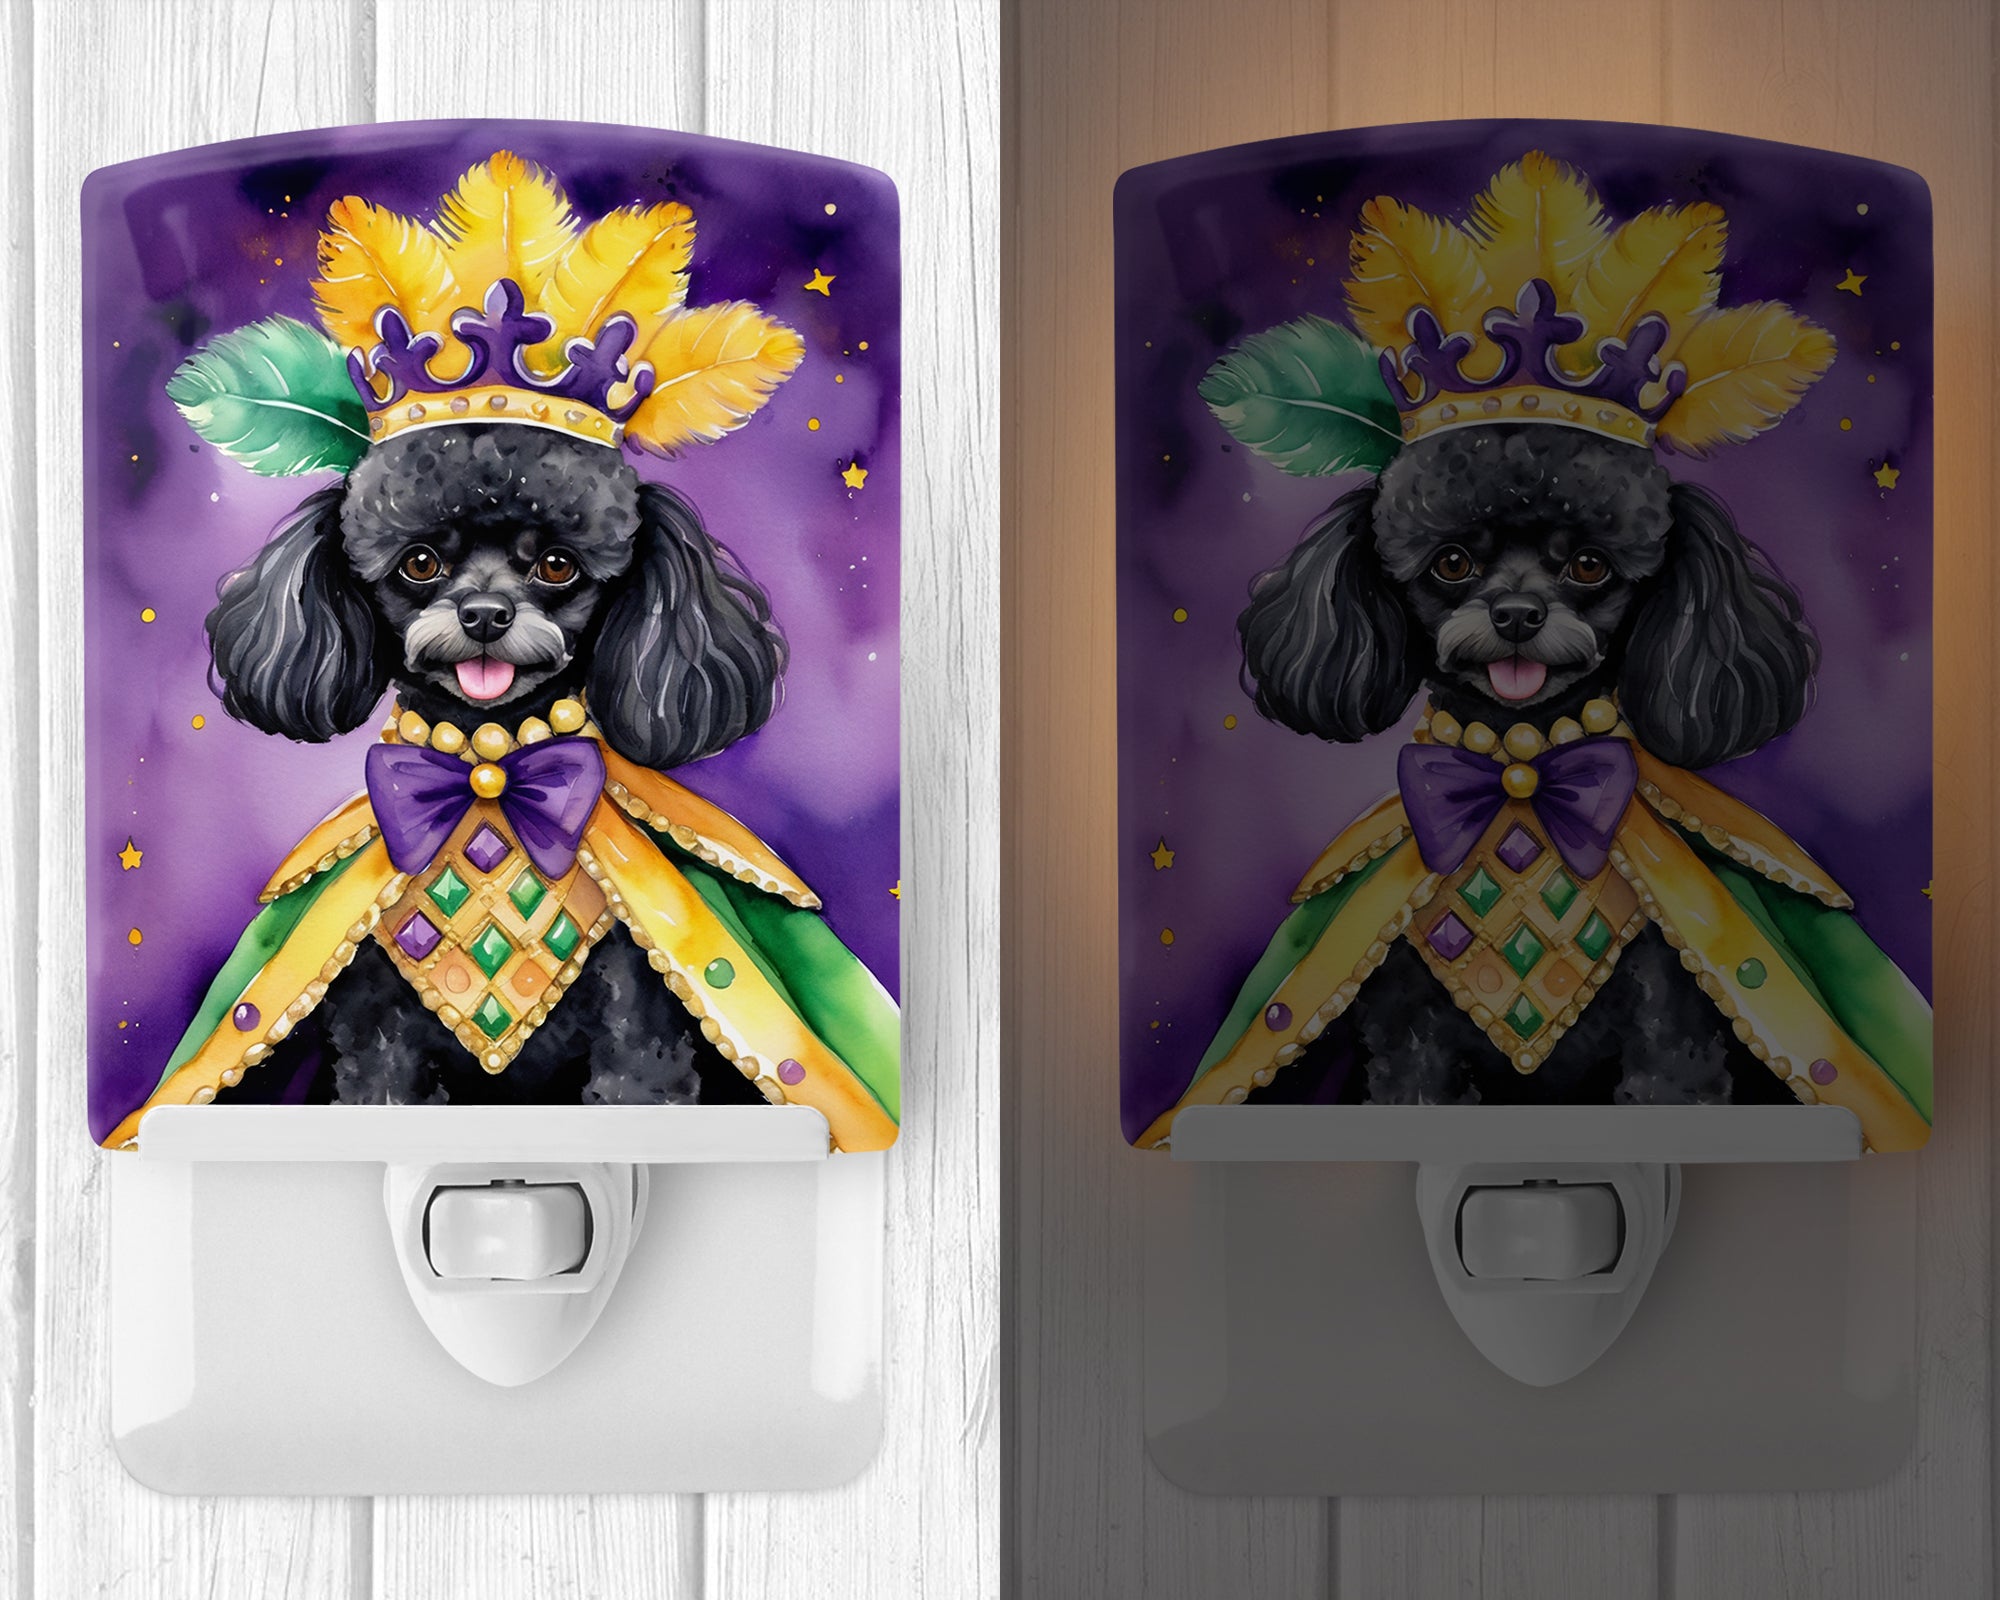 Buy this Black Poodle King of Mardi Gras Ceramic Night Light